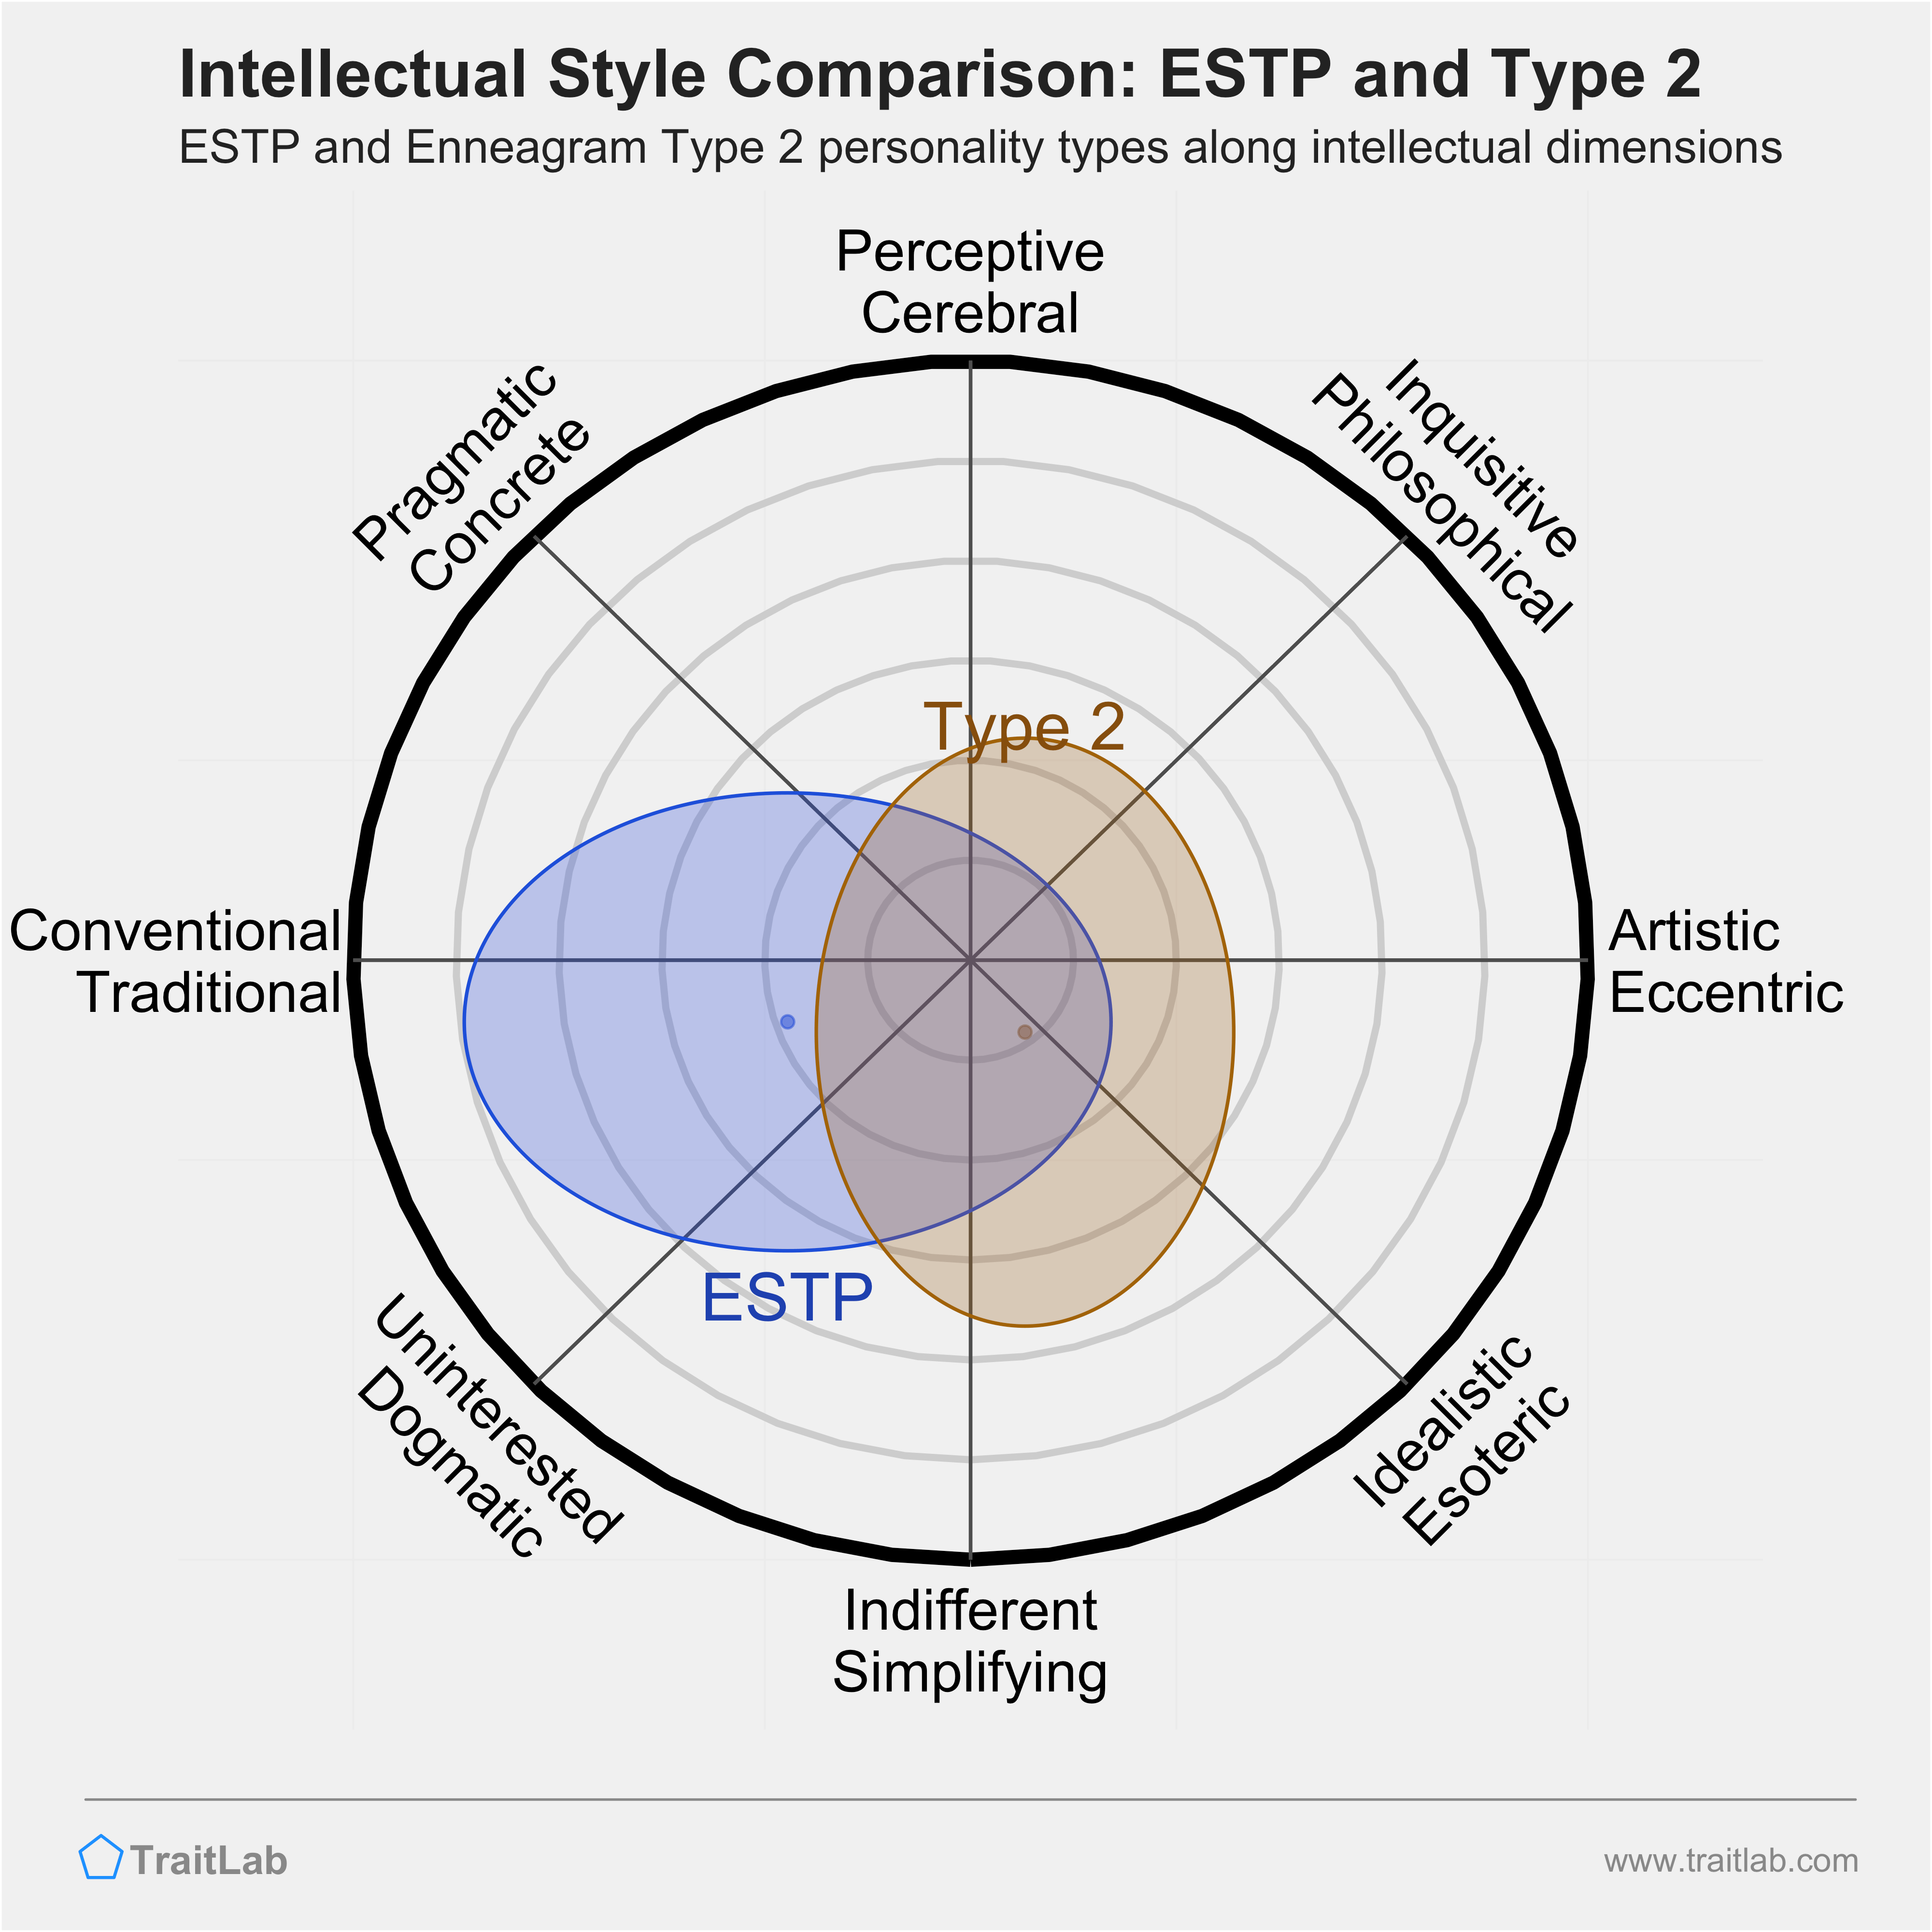 ESTP and Type 2 comparison across intellectual dimensions